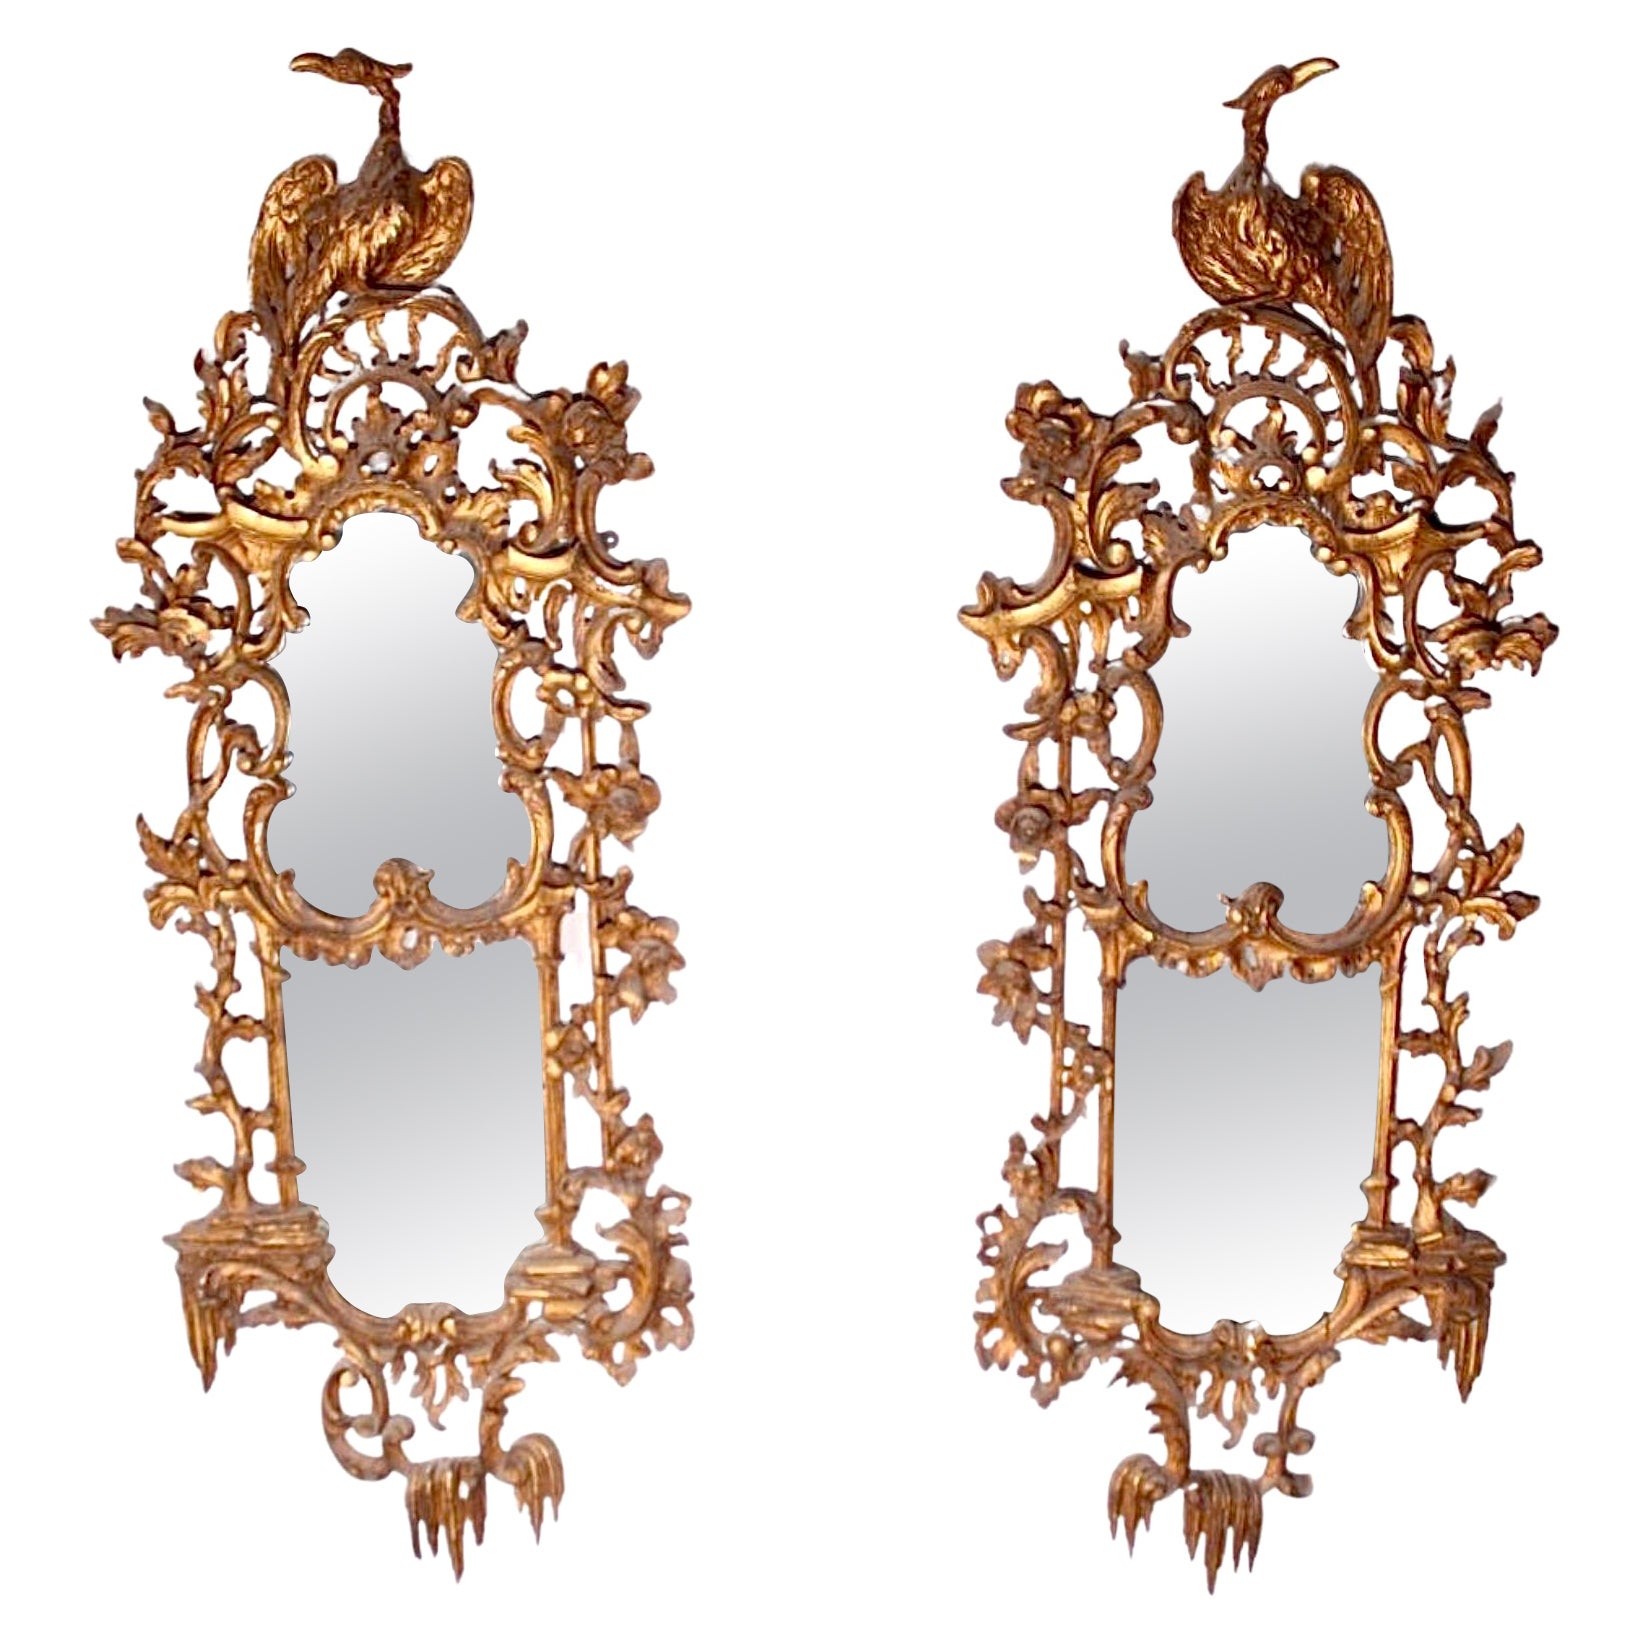 Pair of George III Style Giltwood Pier Mirrors